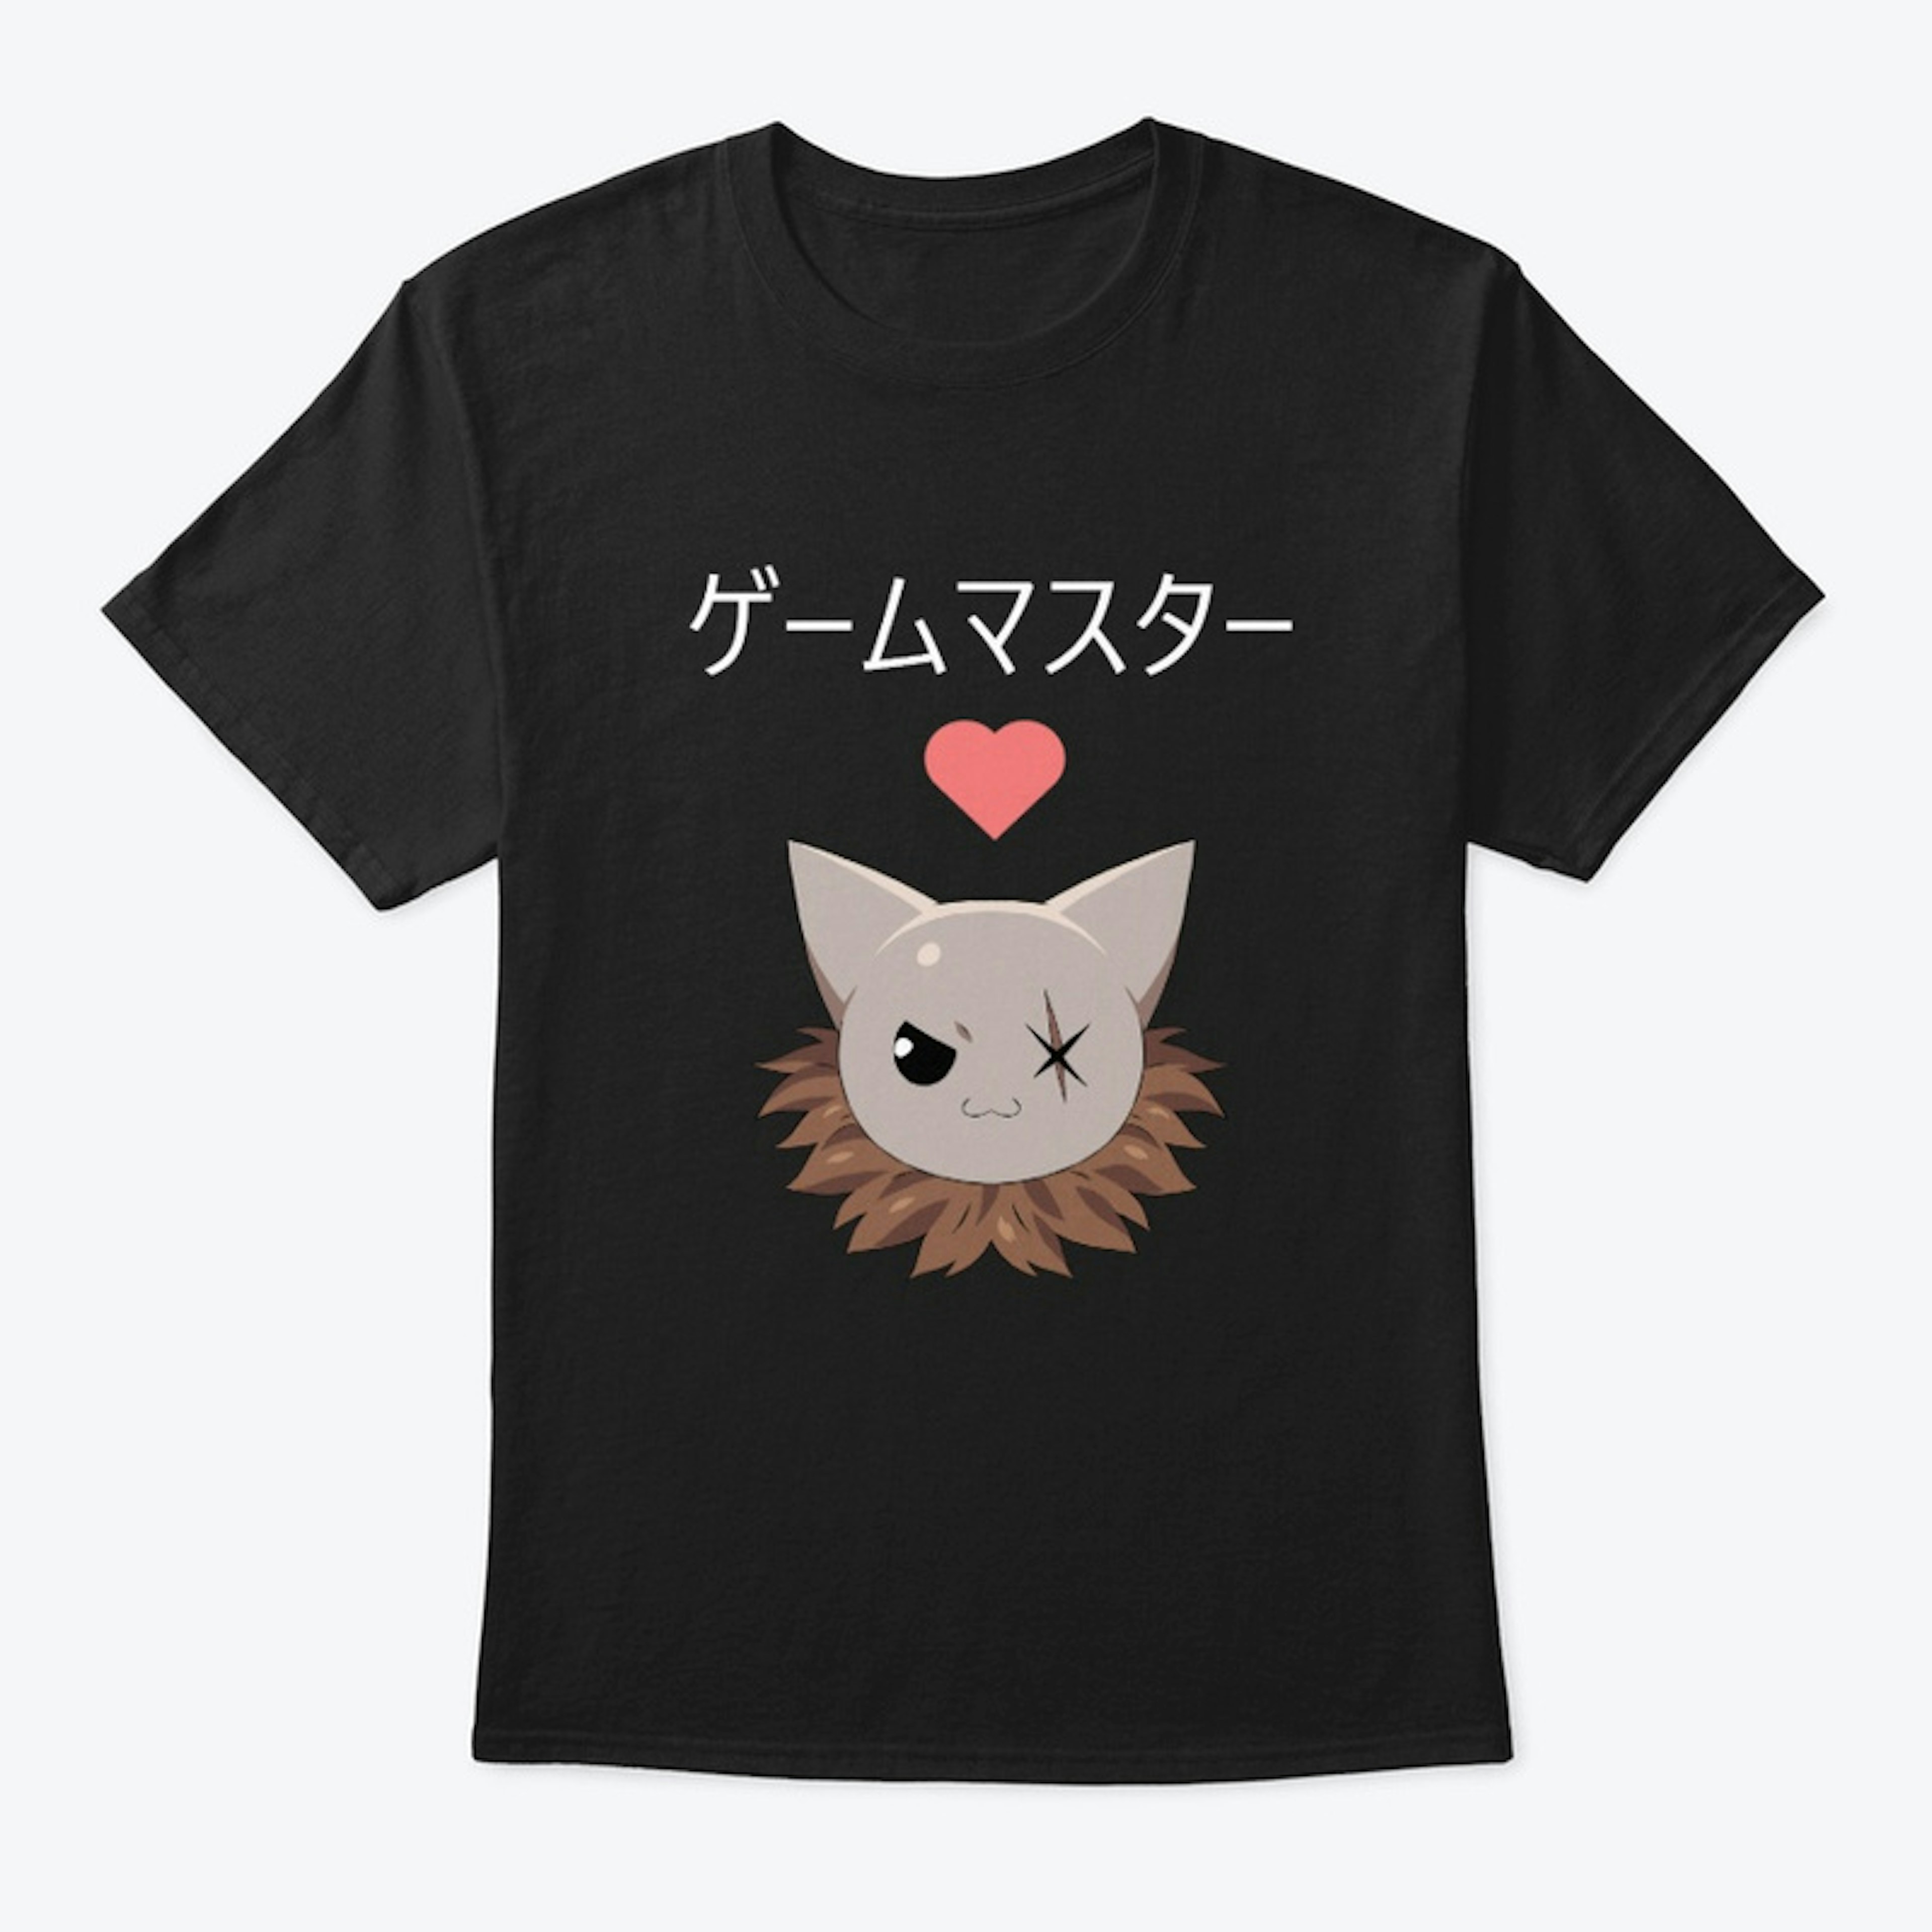 Sadie's Censored Shirt: JAP Game Master